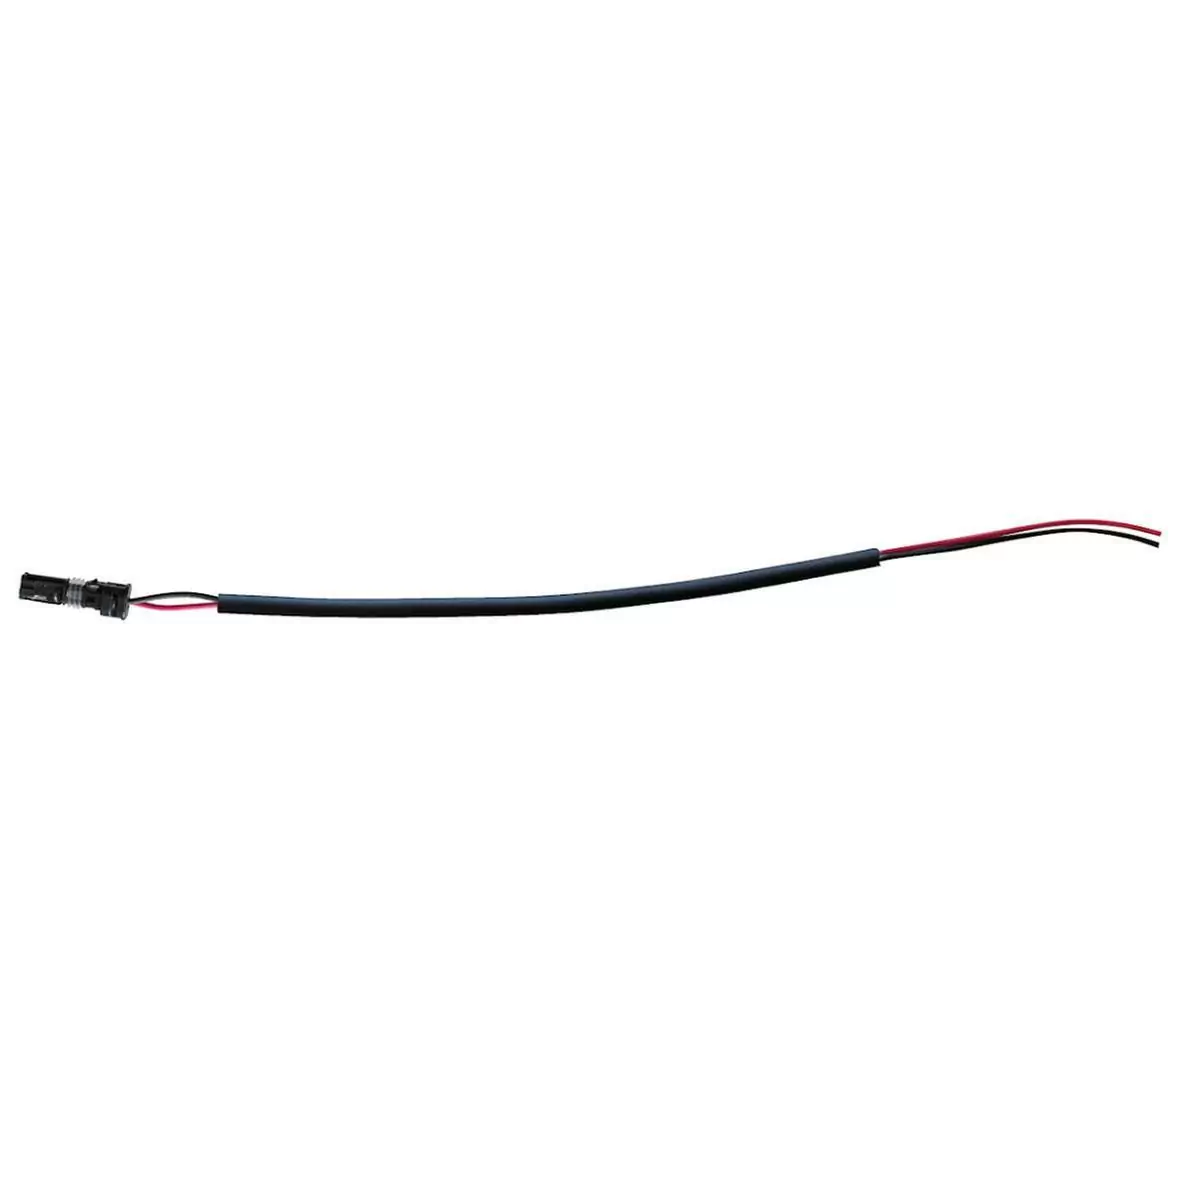 Tail Light Connection Cable 150mm for Bosch Gen2 / Gen3 / Gen4 - image